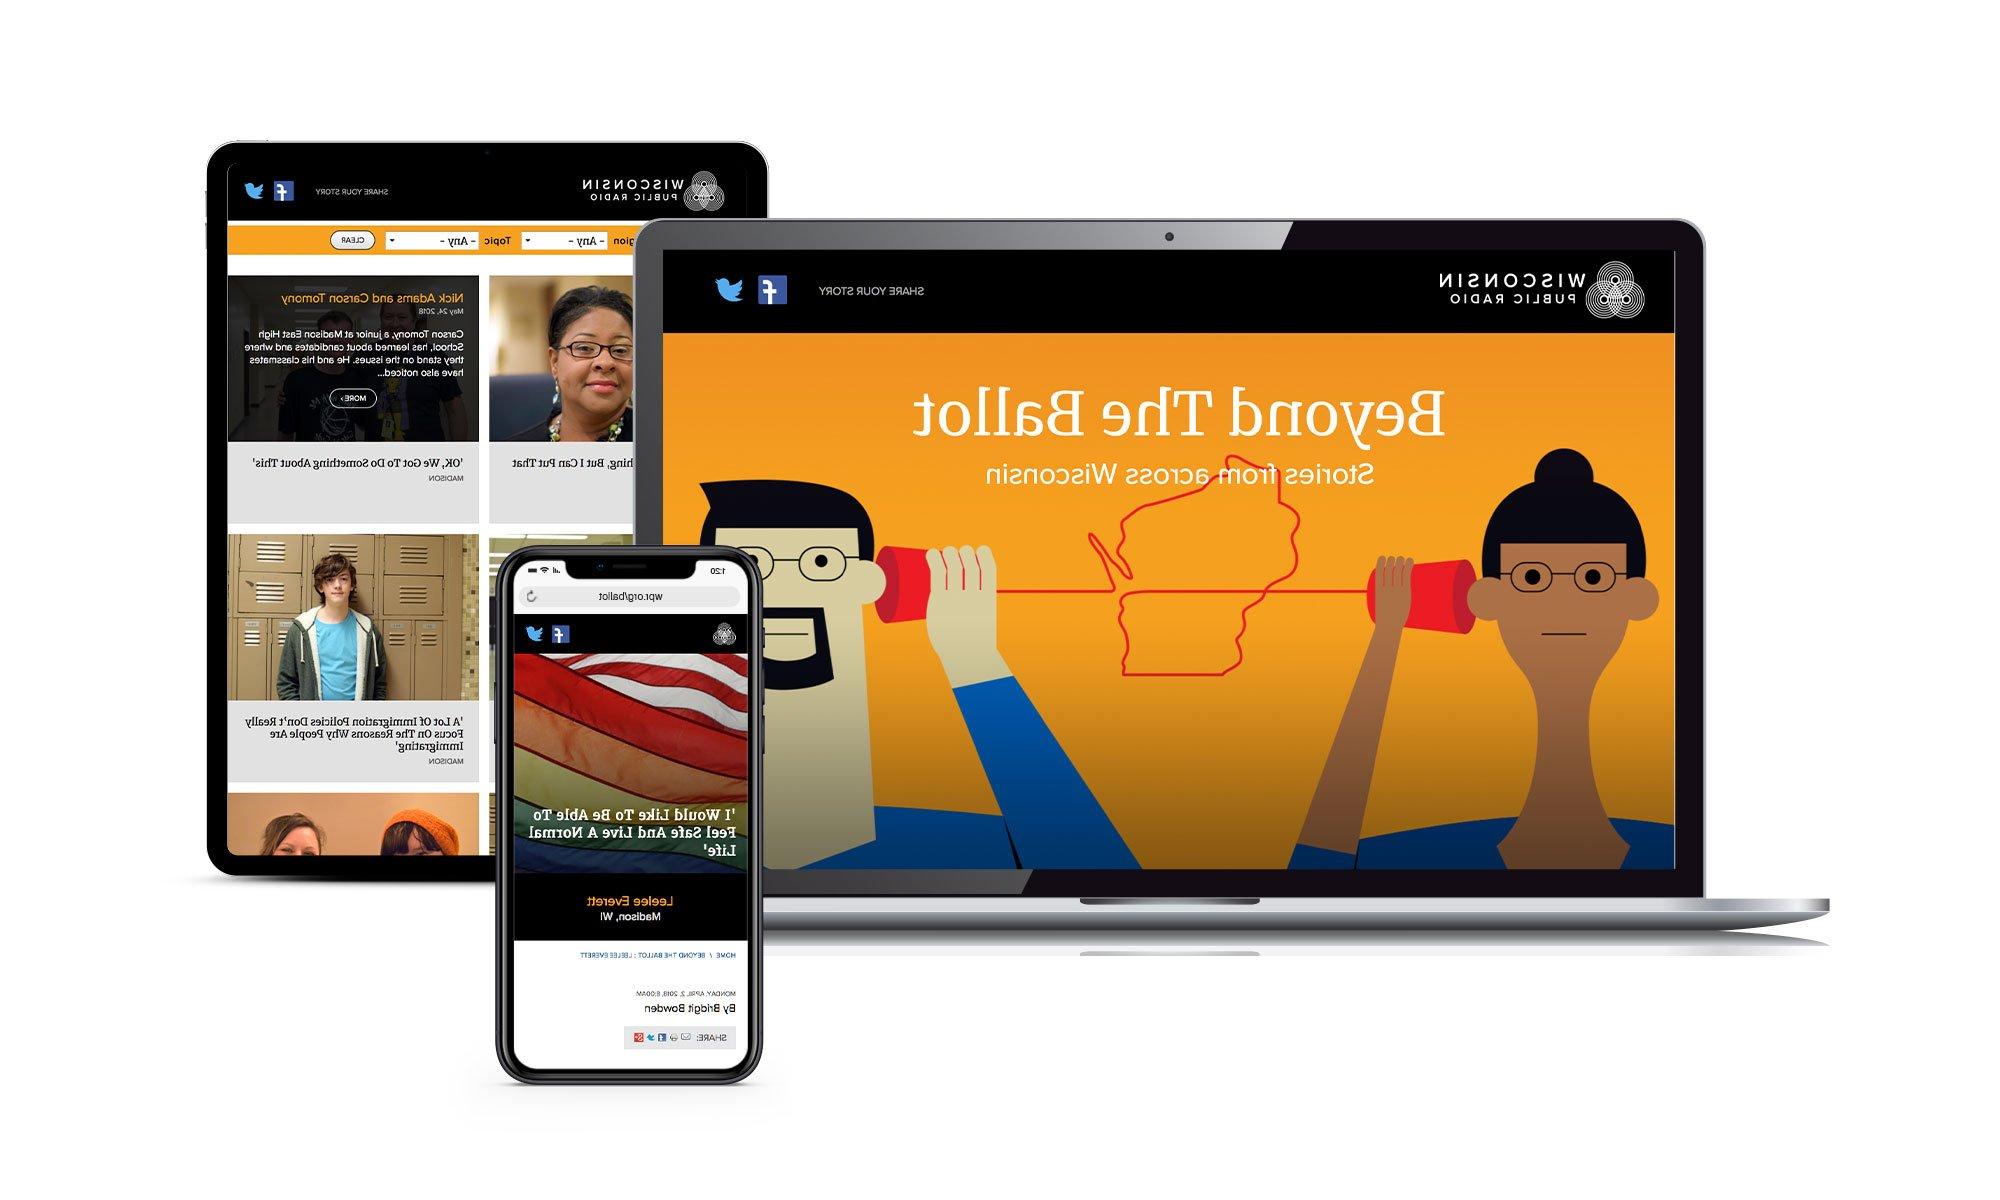 威斯康辛州公共广播电台的Beyond The Ballot网站, created by Vendi, displayed on laptop, tablet and phone screens